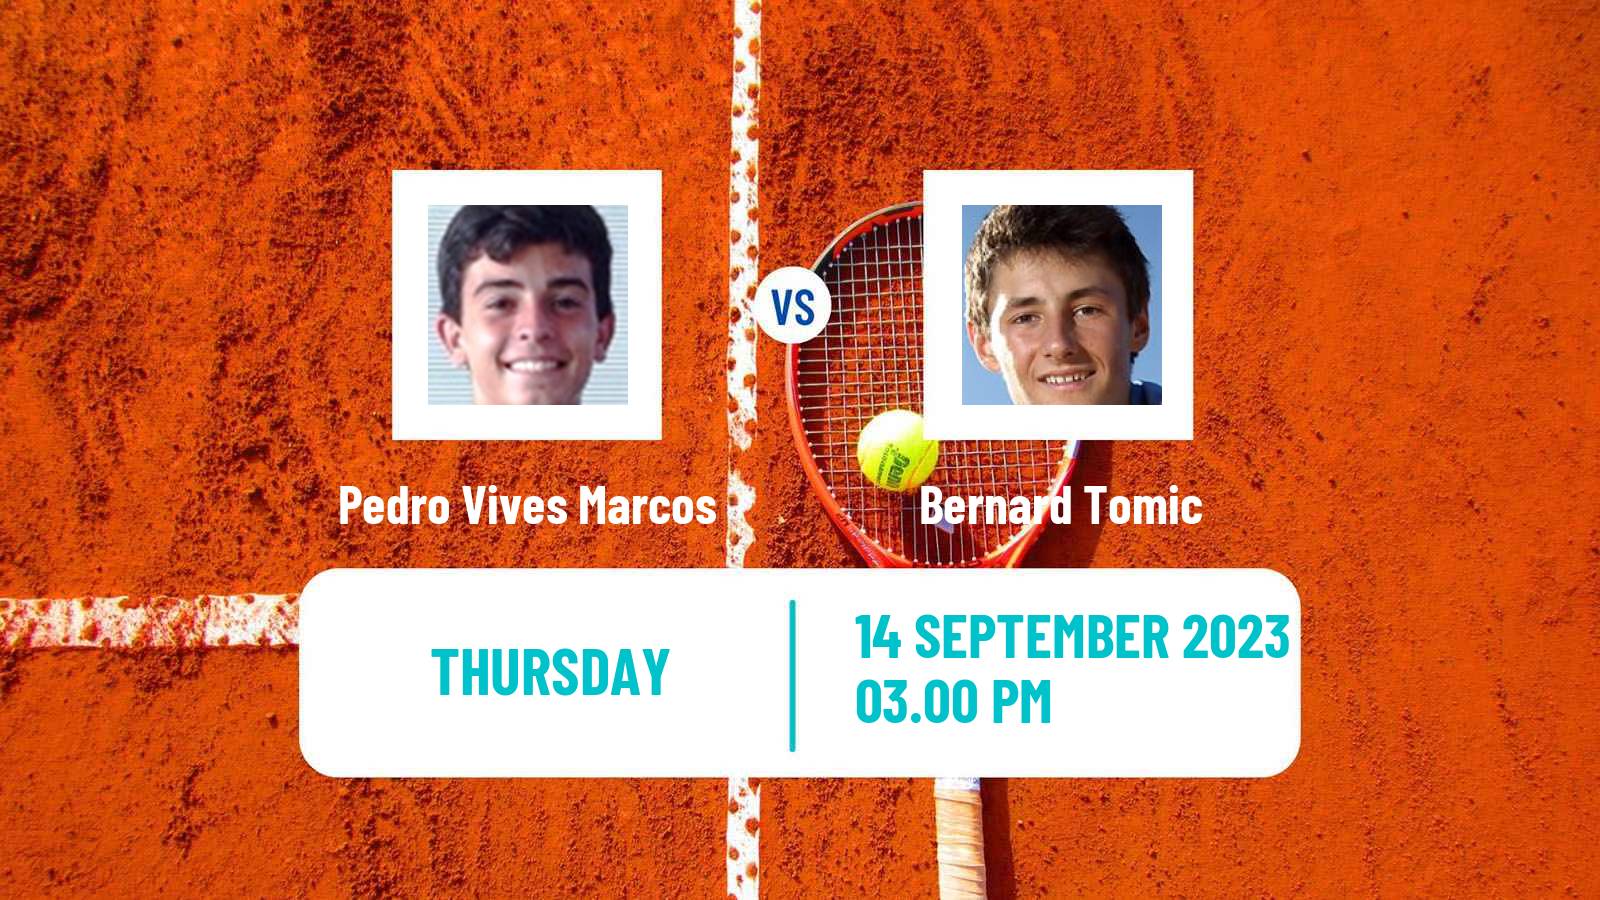 Tennis Cary 2 Challenger Men Pedro Vives Marcos - Bernard Tomic